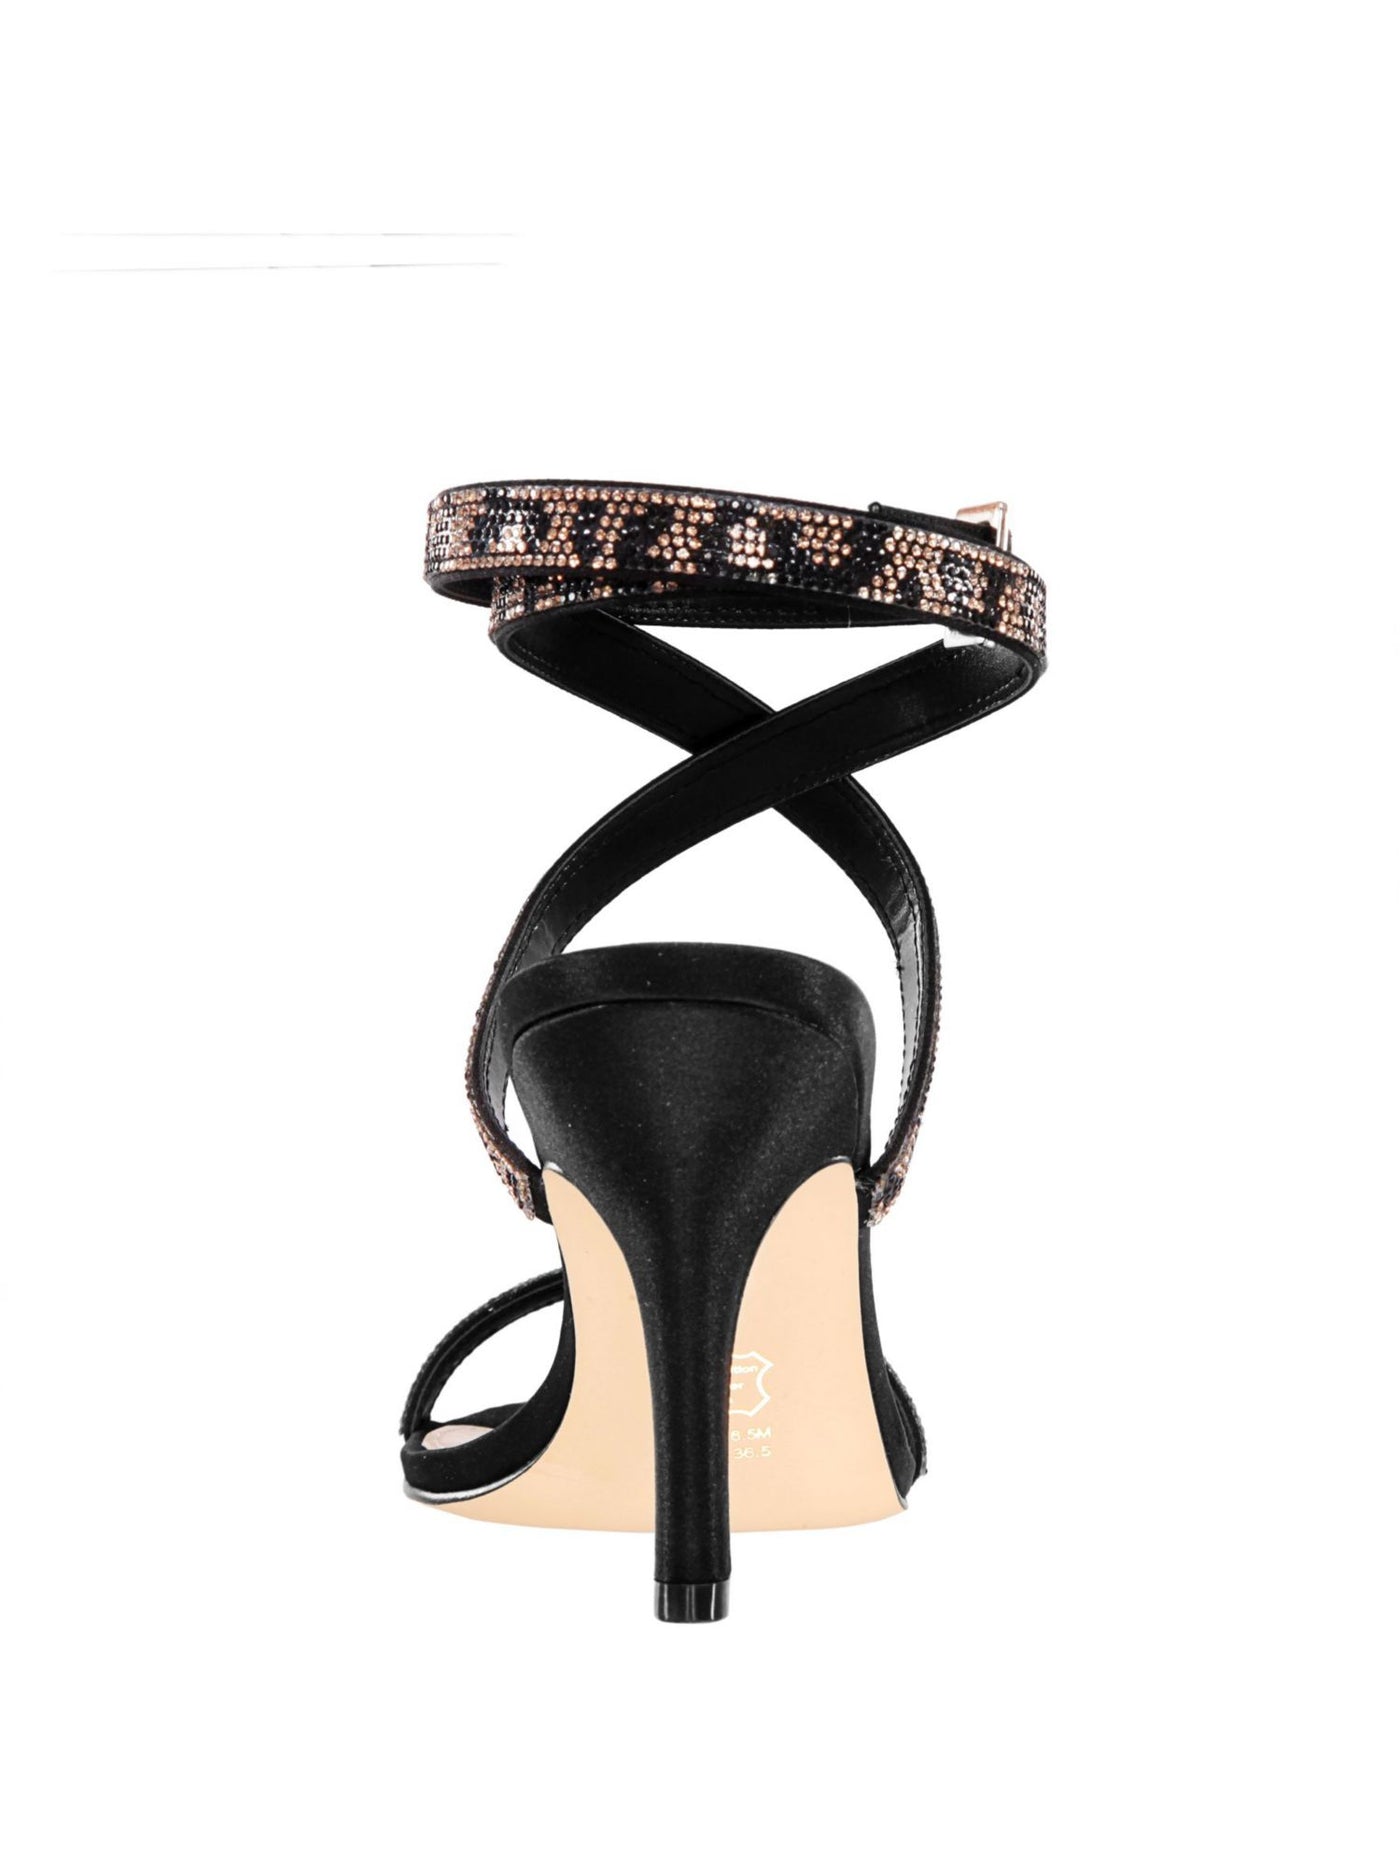 NINA Womens Black Embellished Adjustable Strap Rhinestone Varena Round Toe Stiletto Buckle Dress Sandals Shoes 10